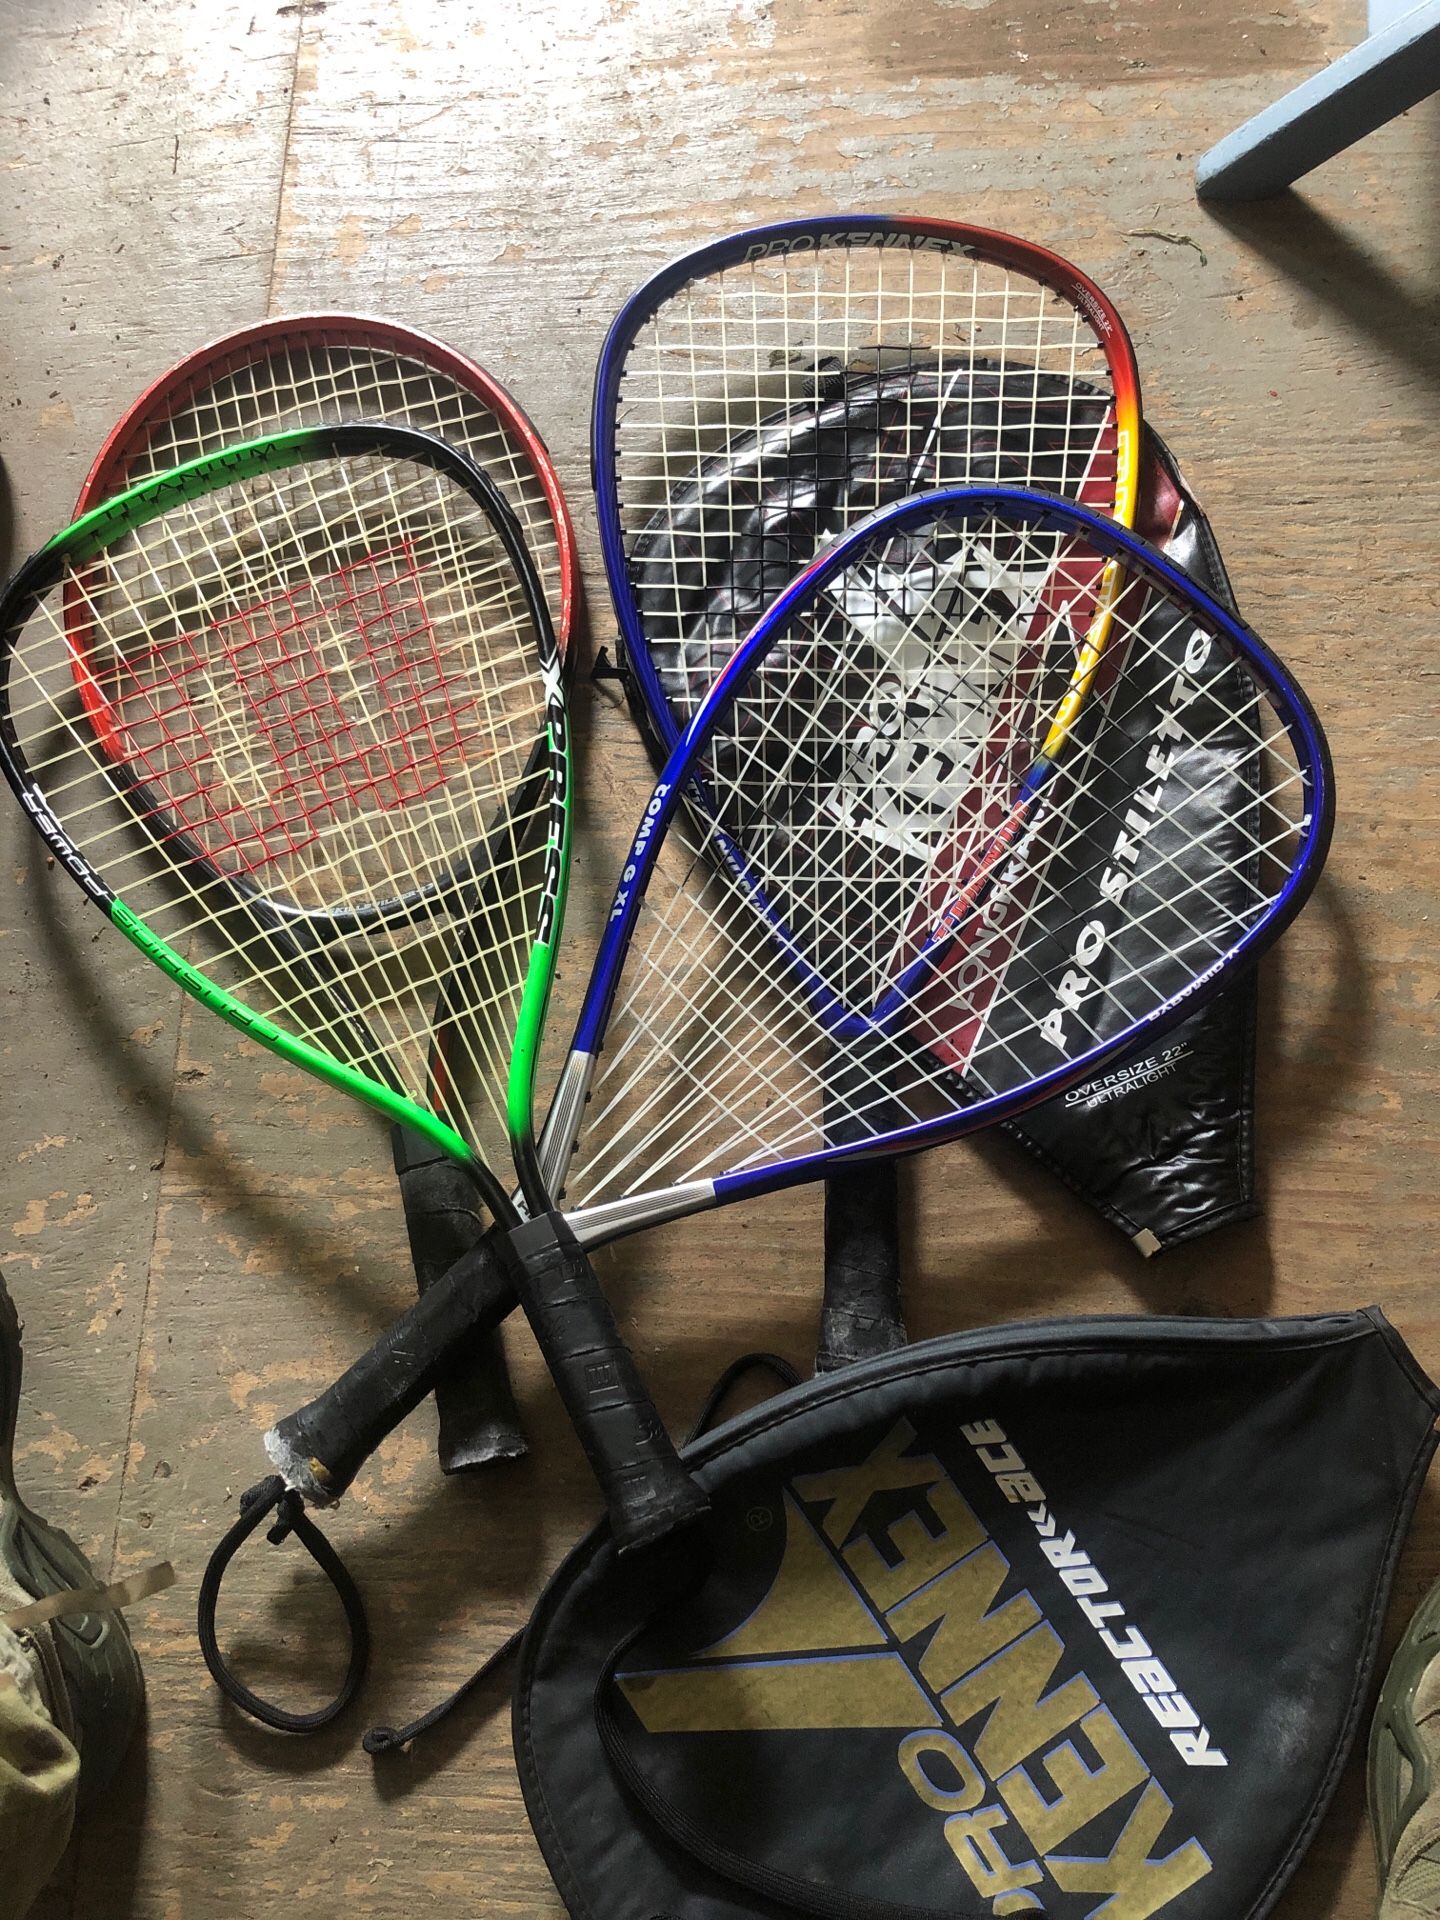 Tennis and racket ball rackets